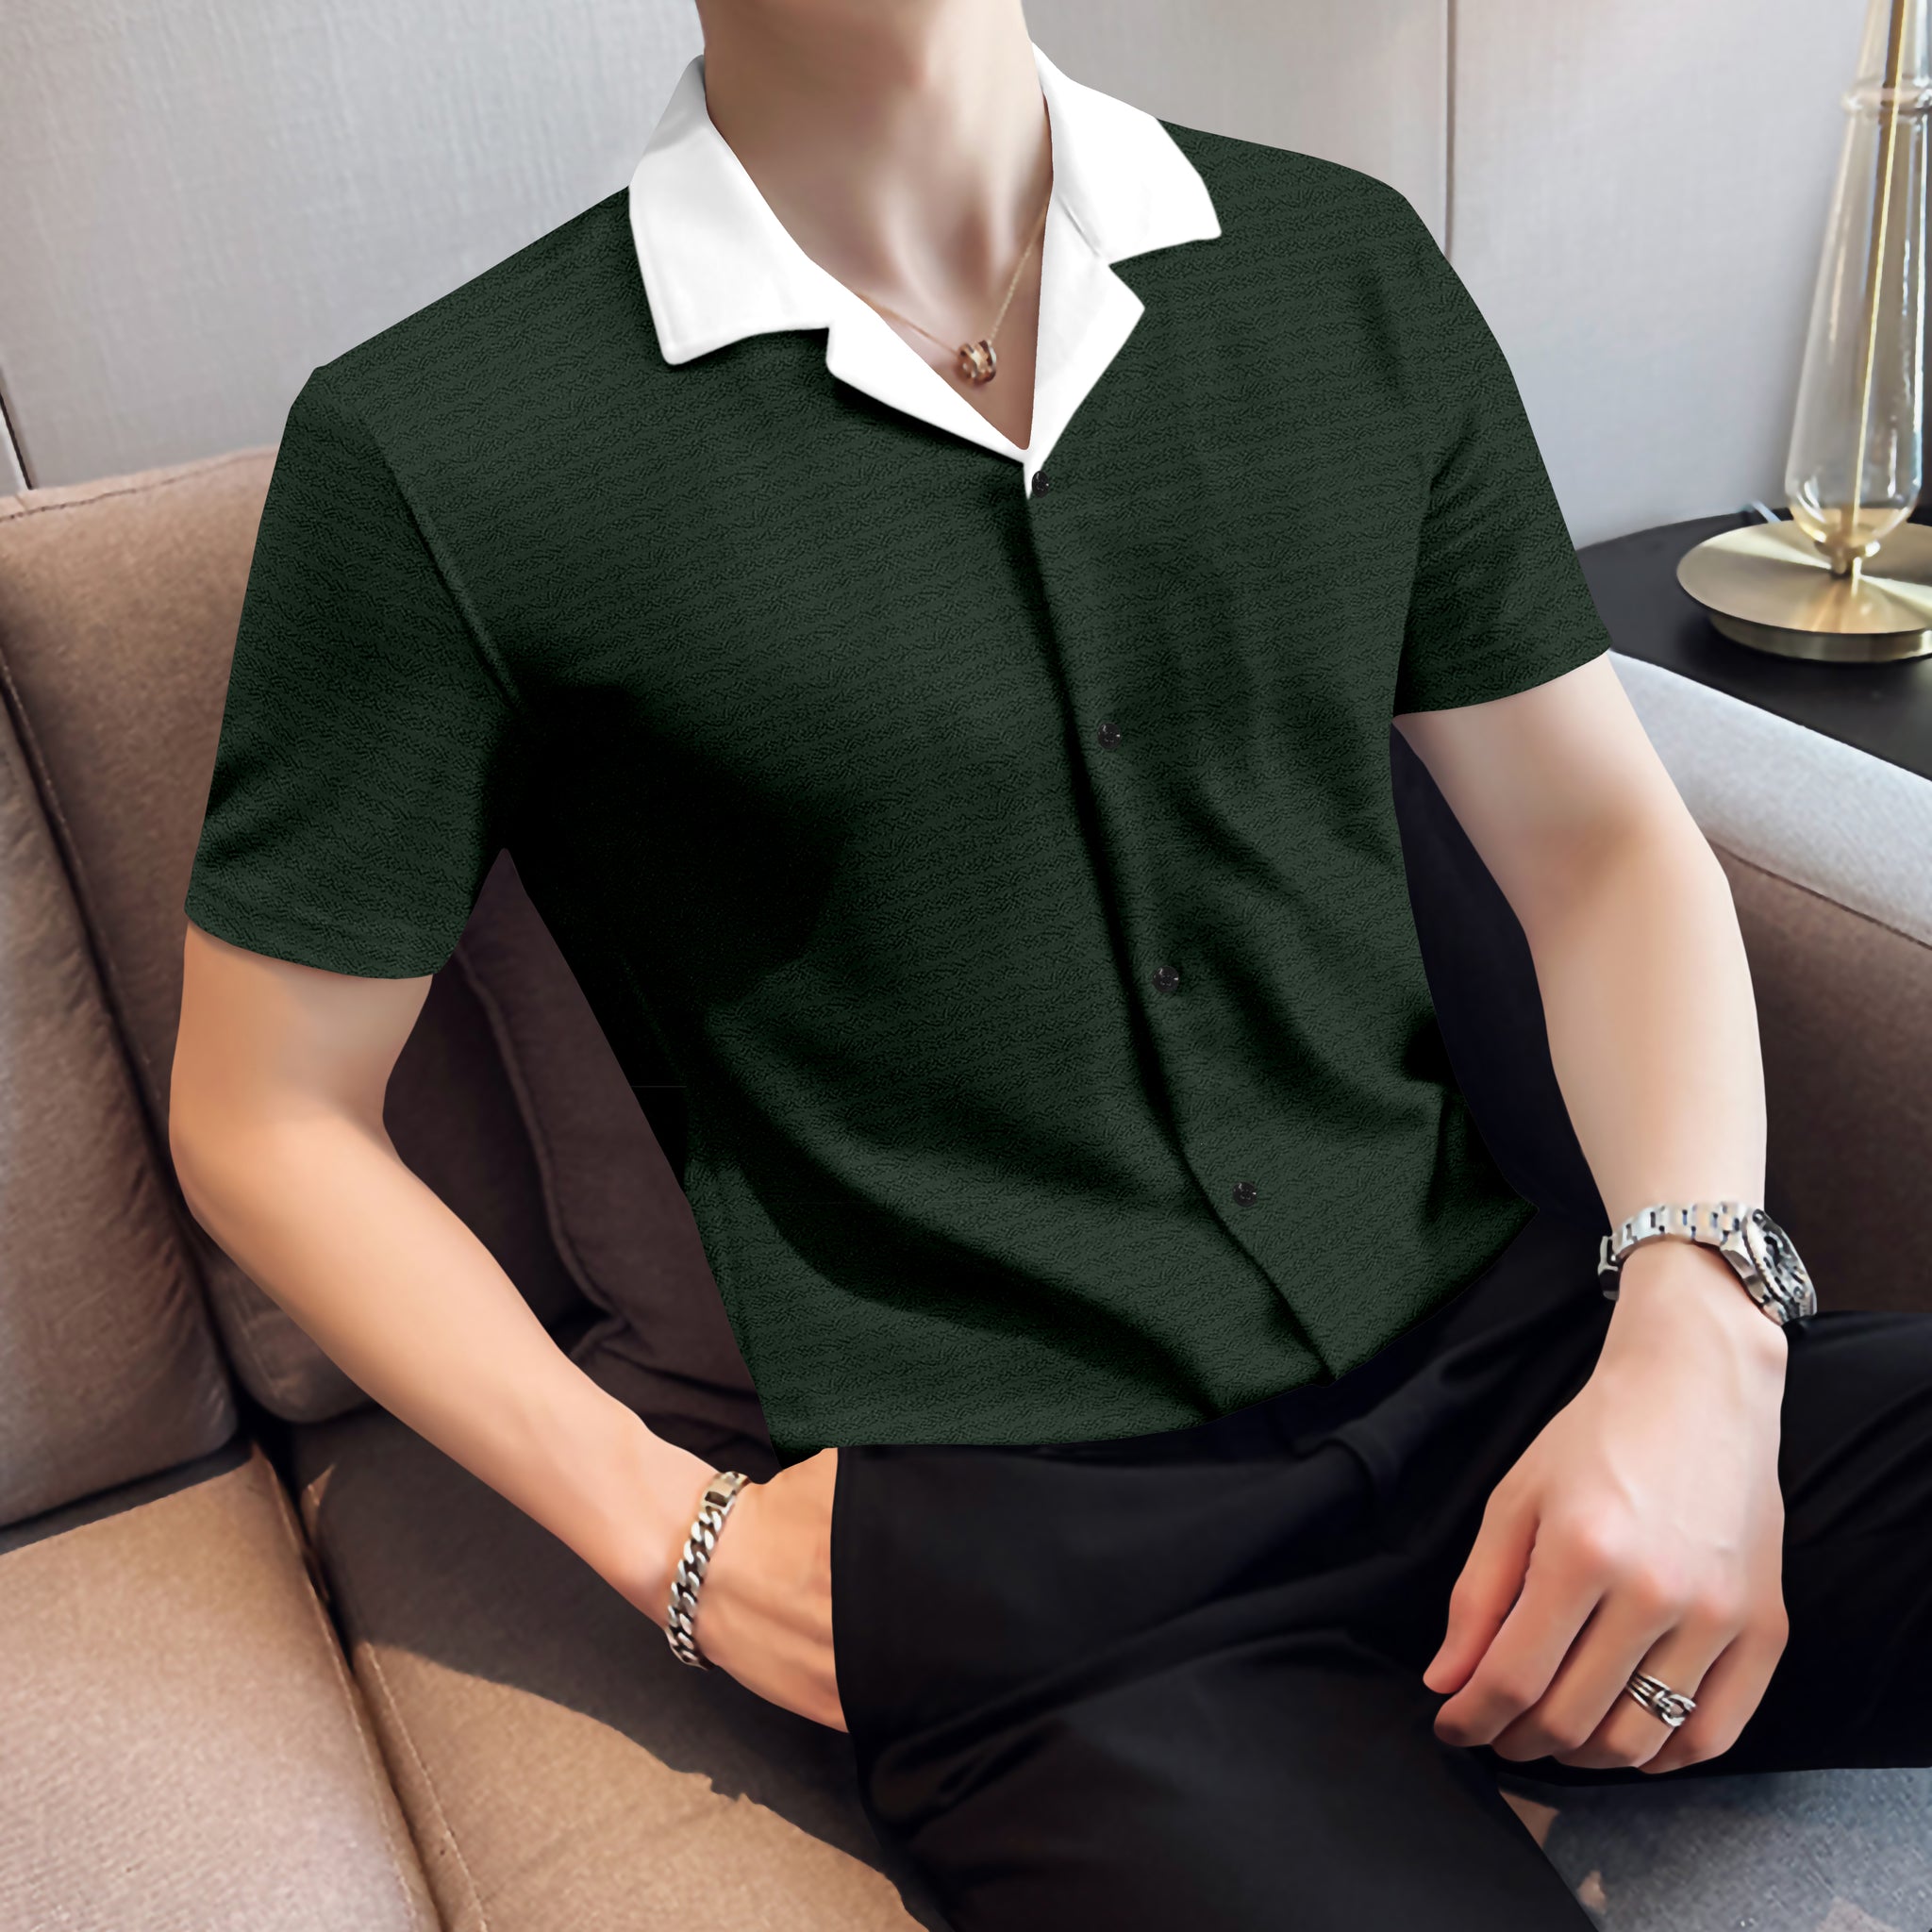 Premium Green Shirt With White Revere Collar